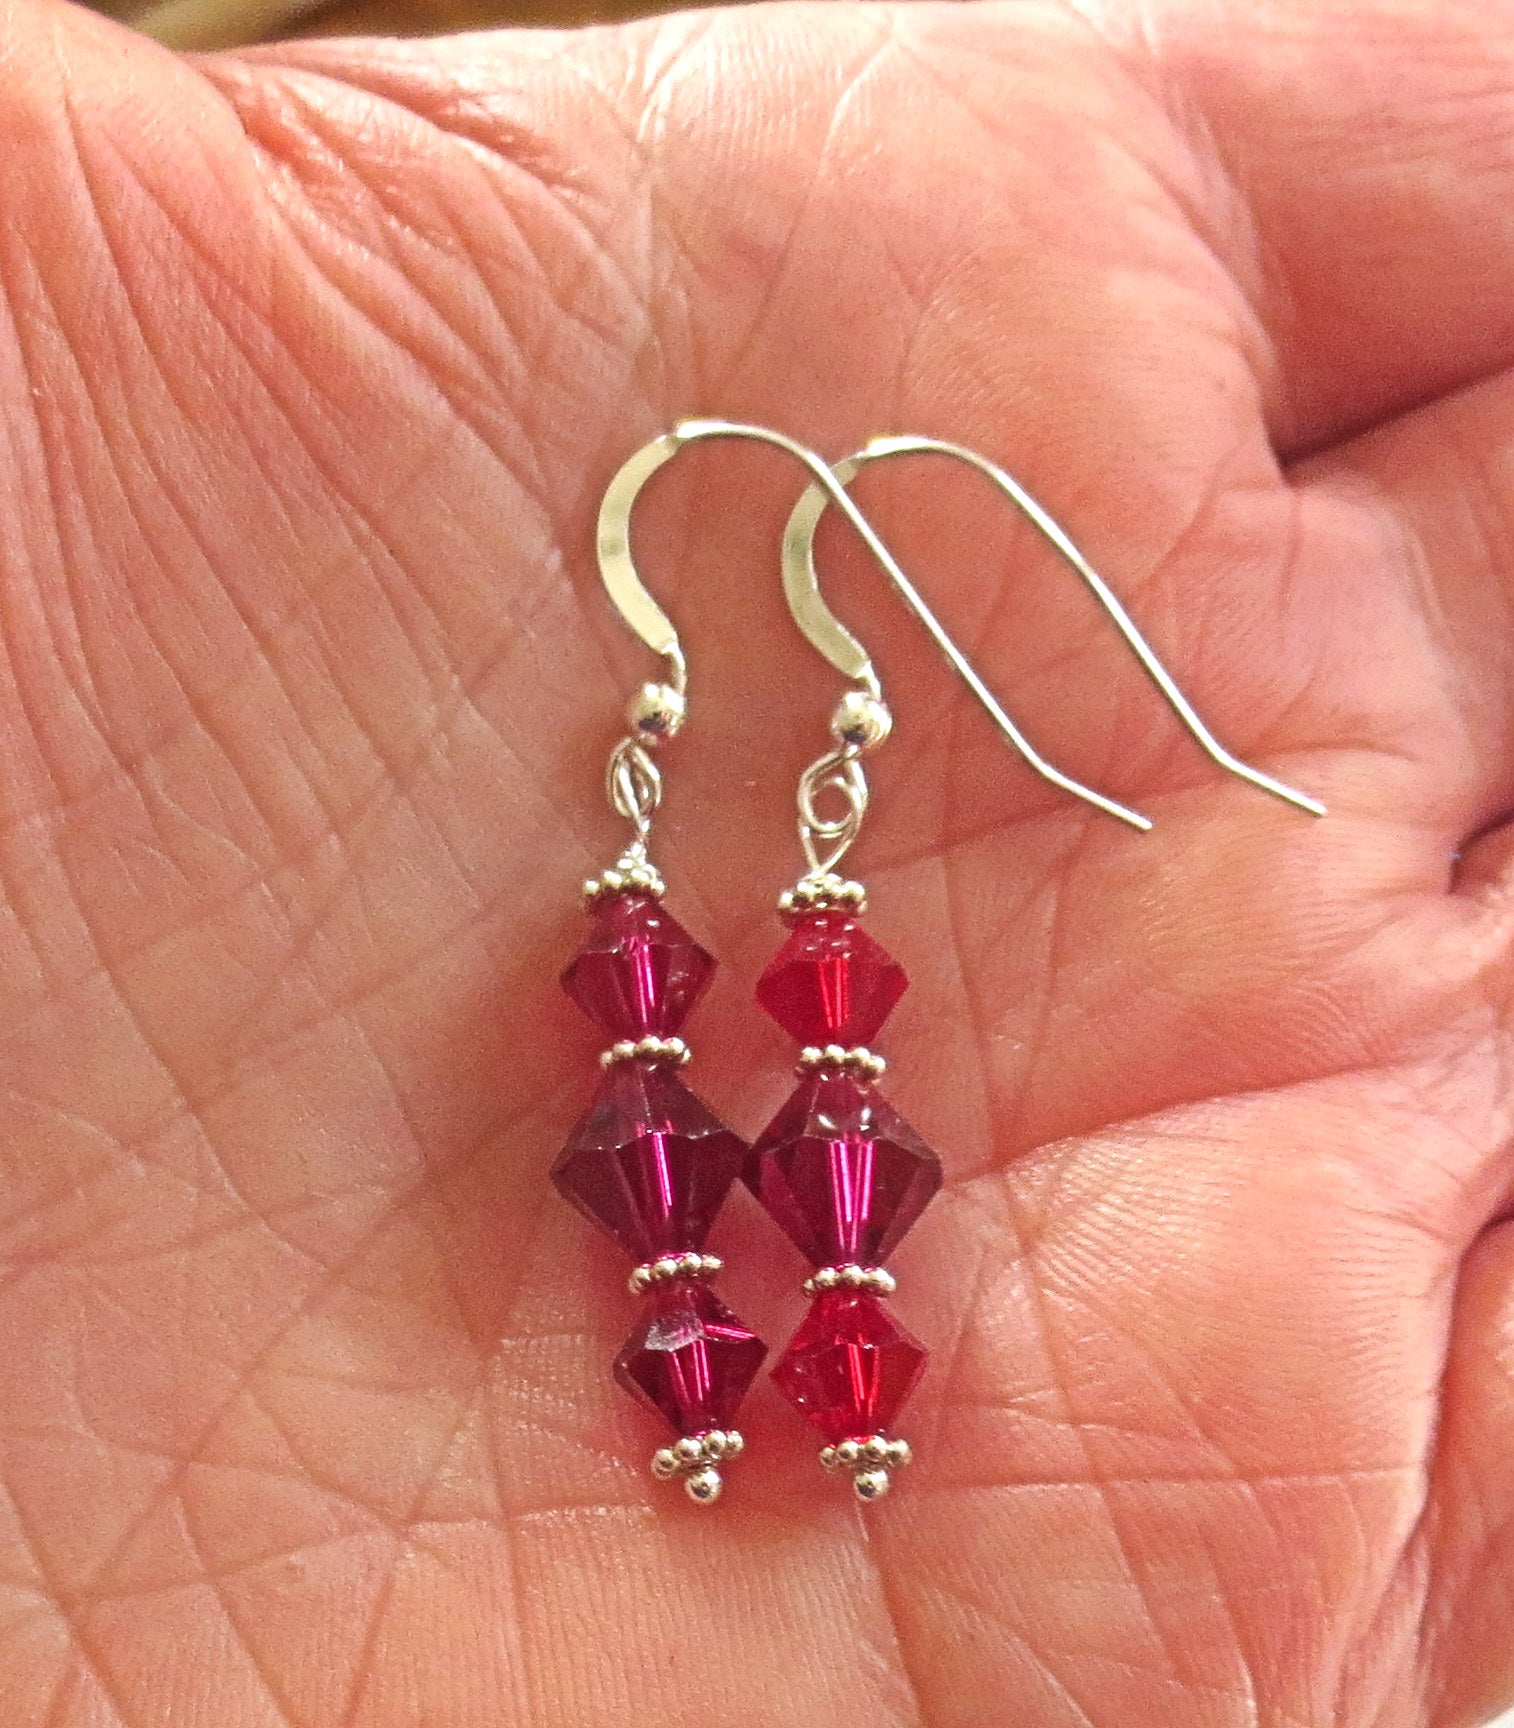 swarovski crystal earrings all sterling silver birthstone crystal earrings ruby red / sterling regular ear wires